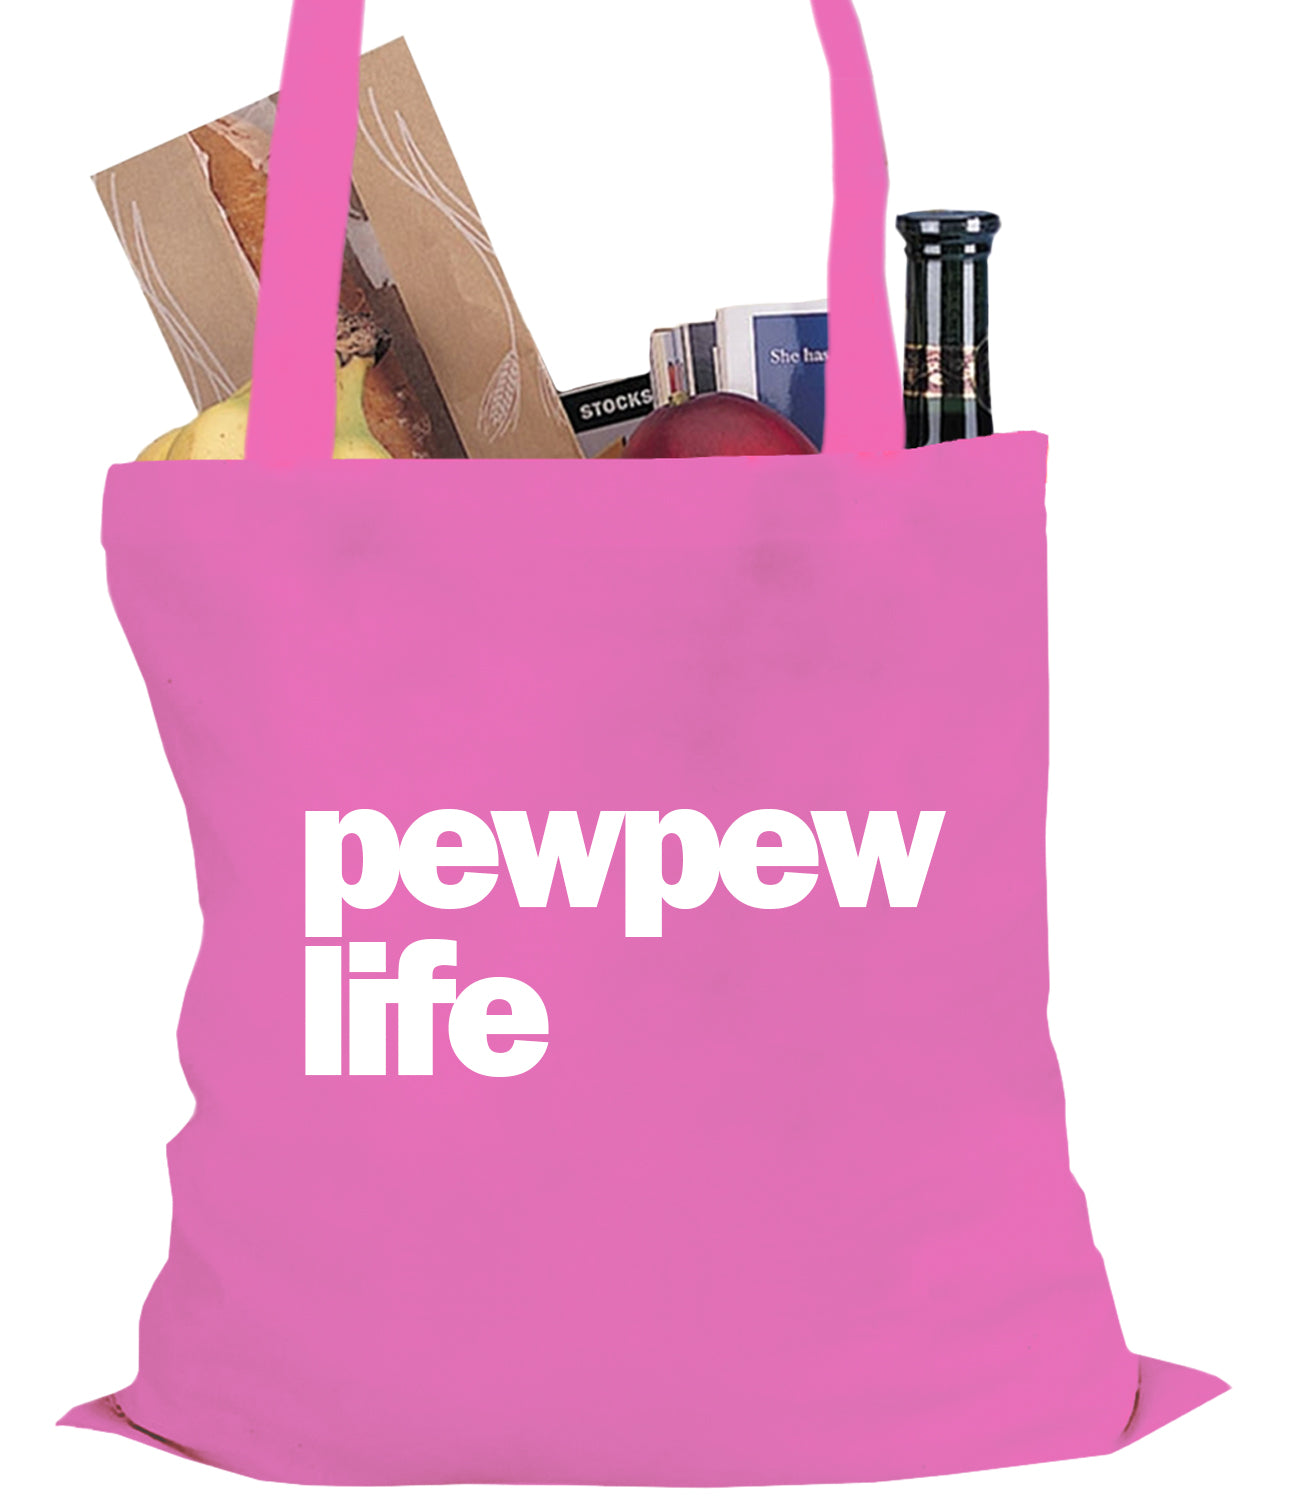 The Pew Pew Life Tote Bag